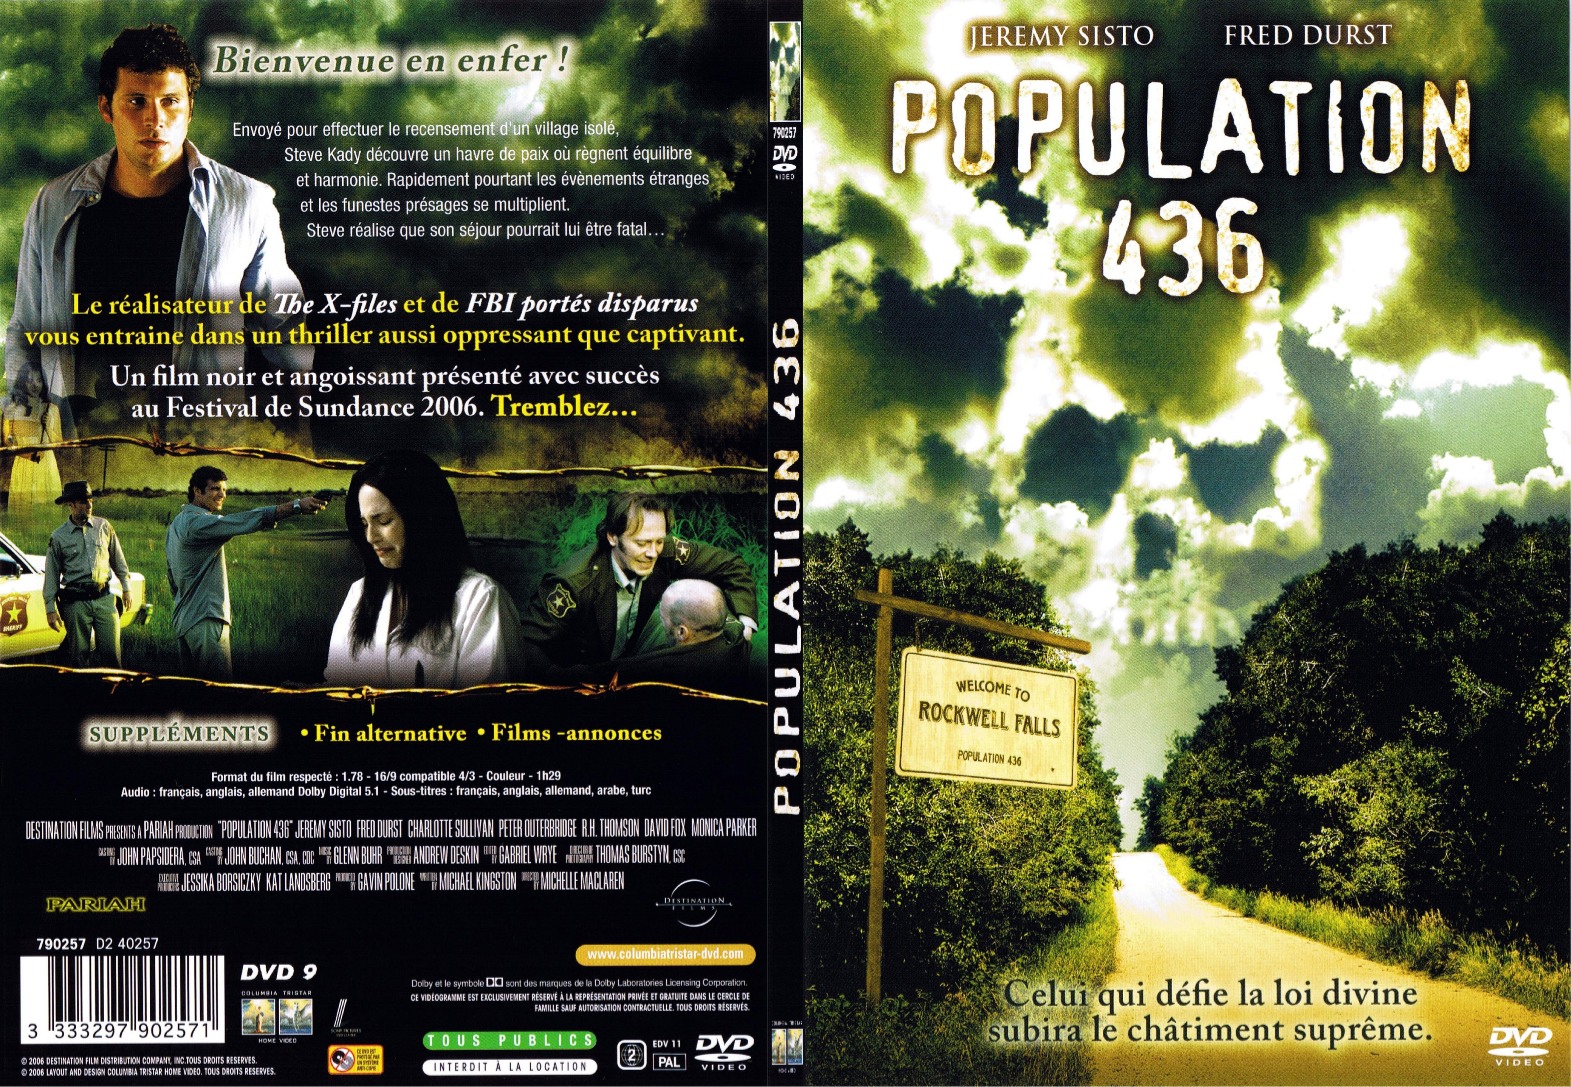 Jaquette DVD Population 436 - SLIM